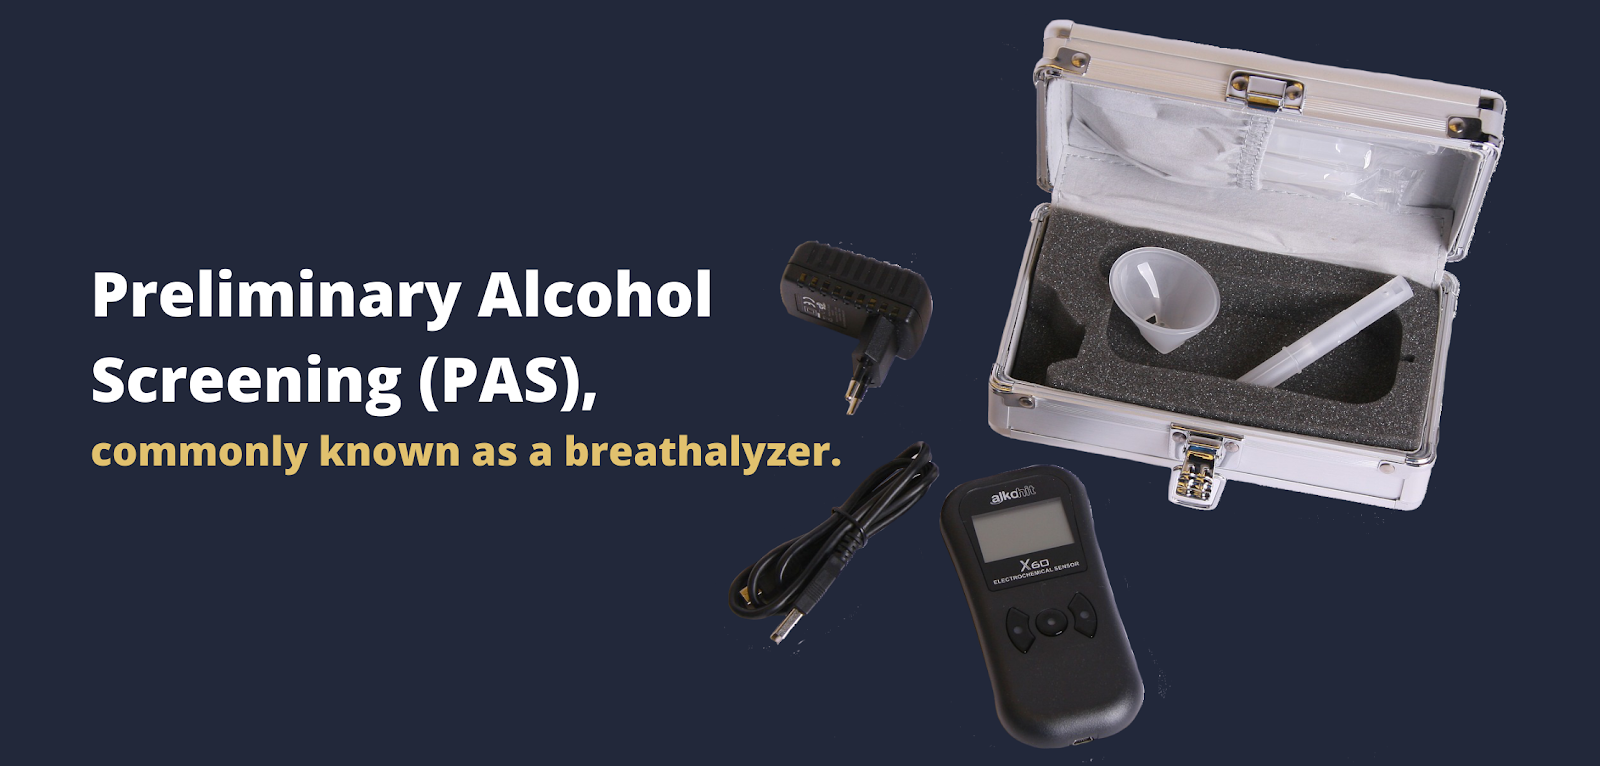 Breathalyzer test